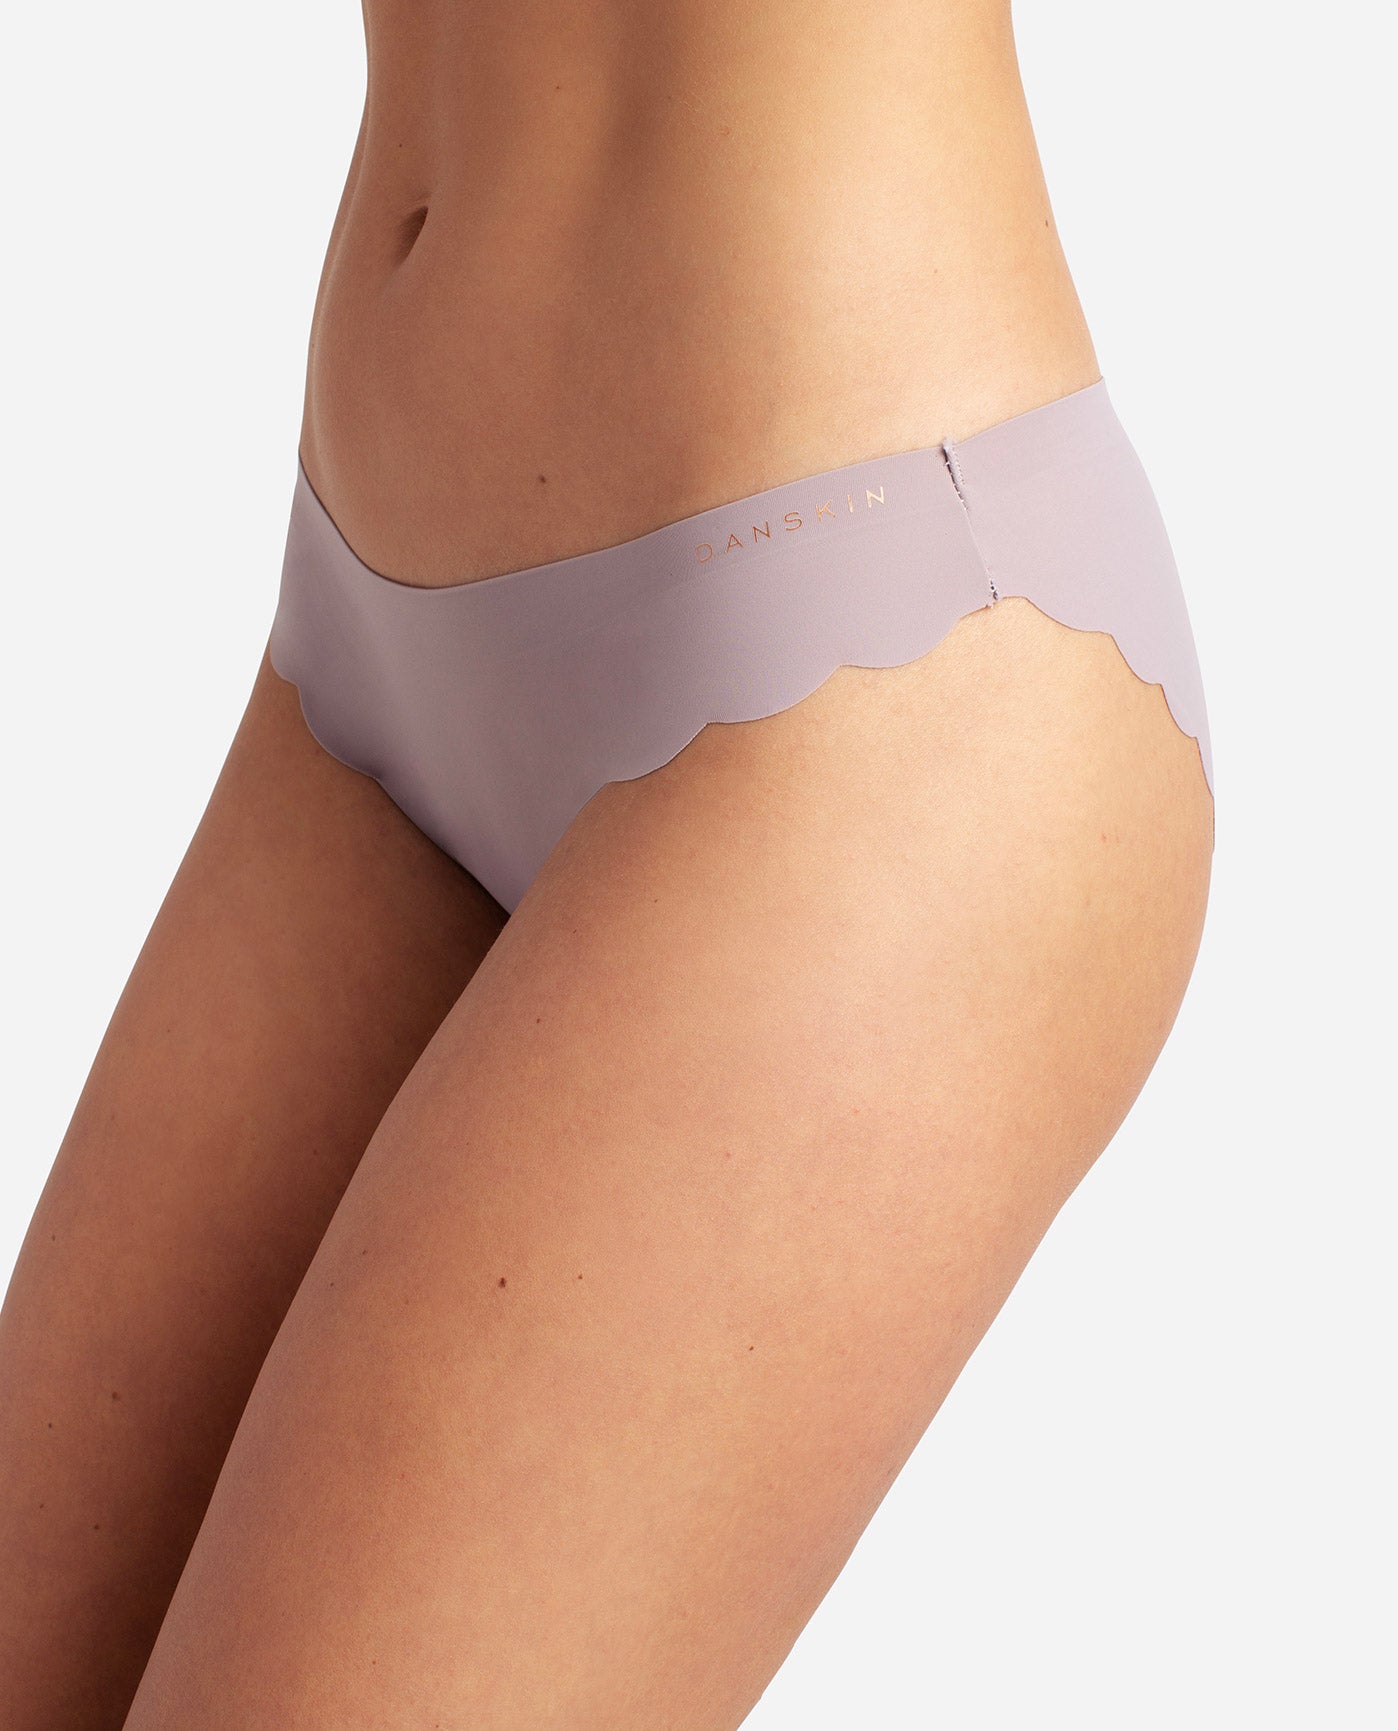 Danskin Assorted Bikini Underwear - Pack of 5 - ShopStyle Panties